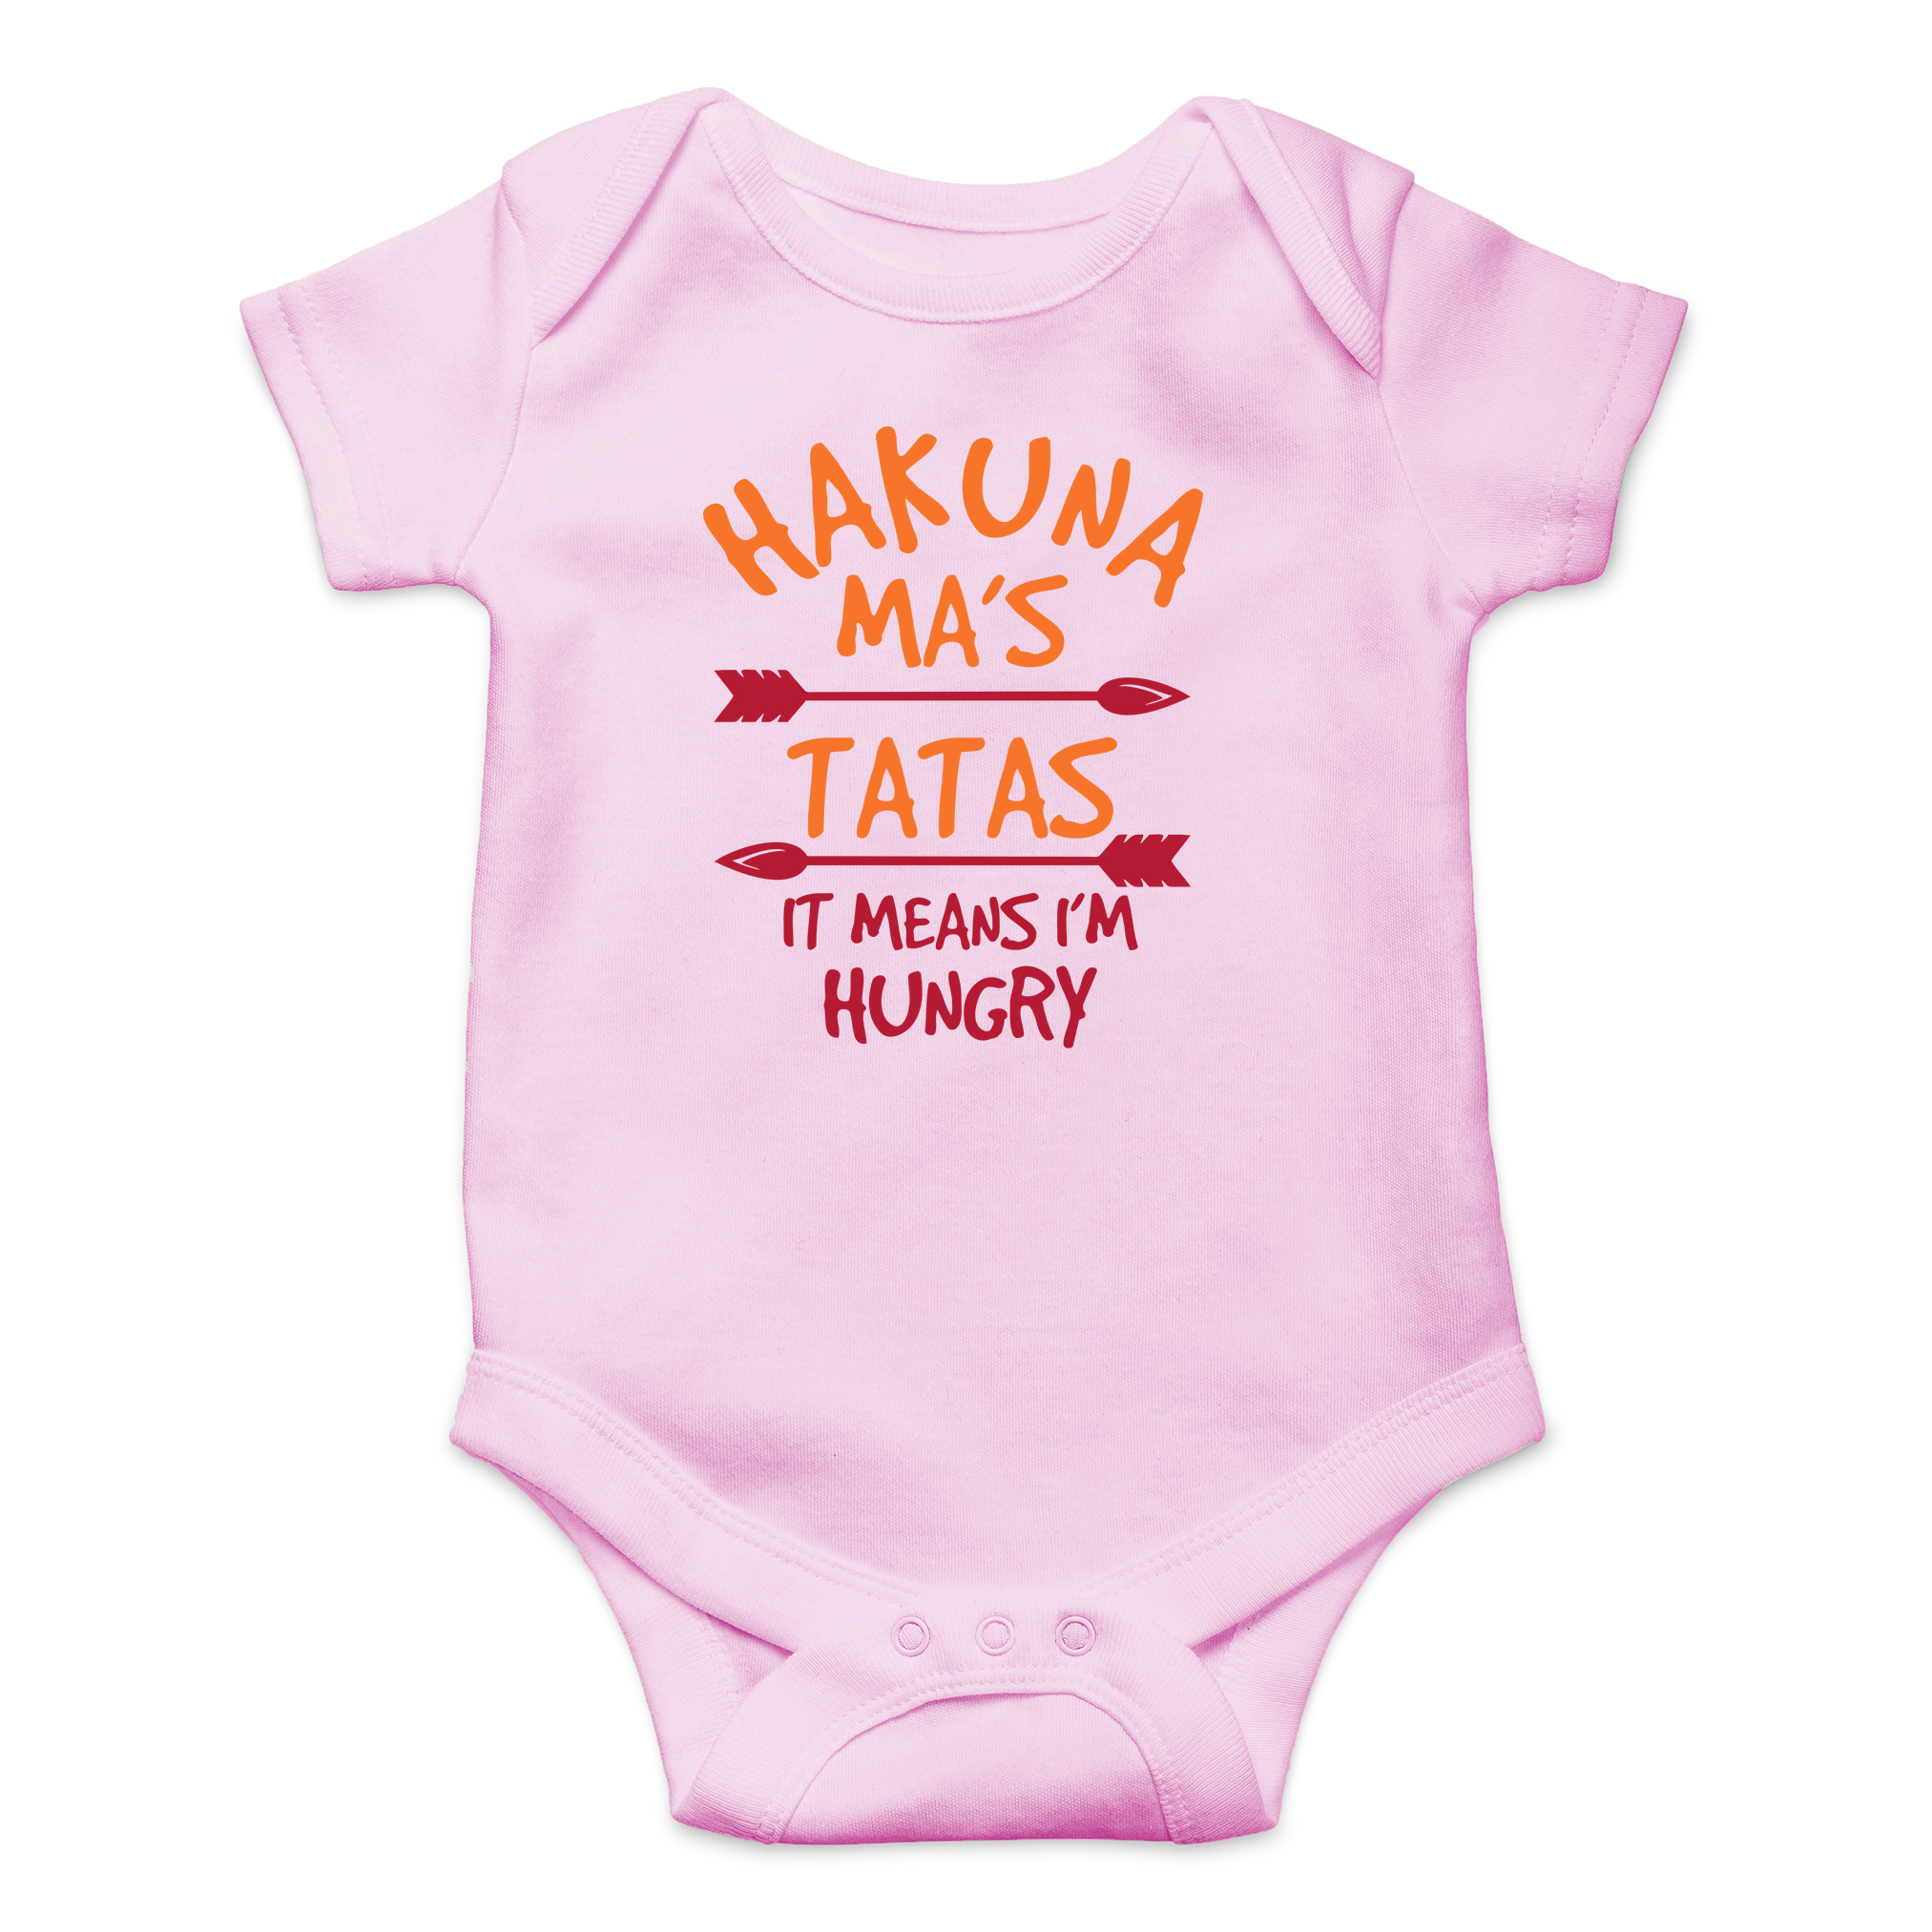 Hakuna Ma's Ta Tas - Funny Movie Parody - Breastfeeding Joke - Cute One-Piece Infant Baby Bodysuit - image 1 of 4